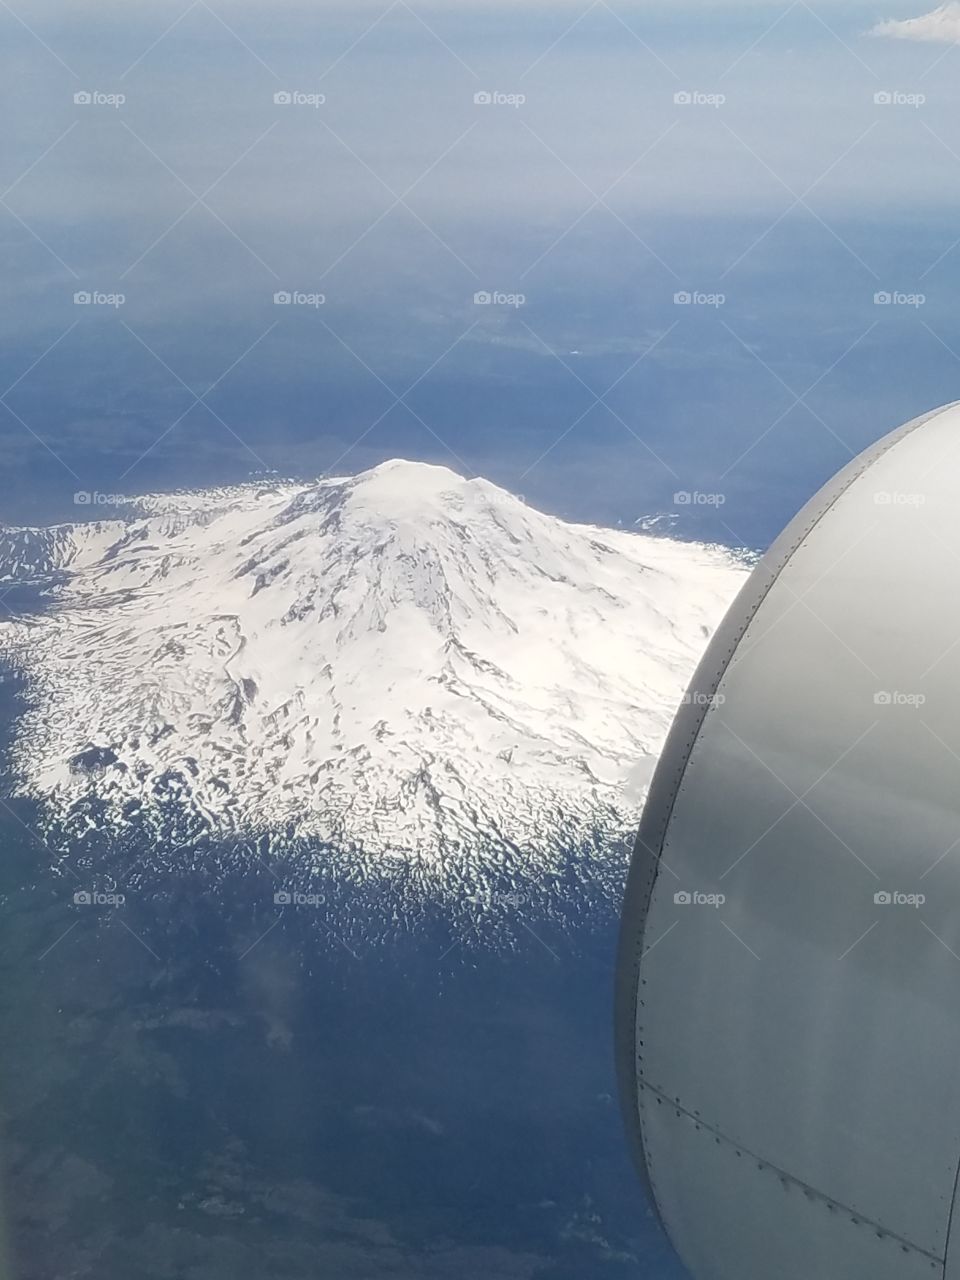 Mount Rainier From an Airplane